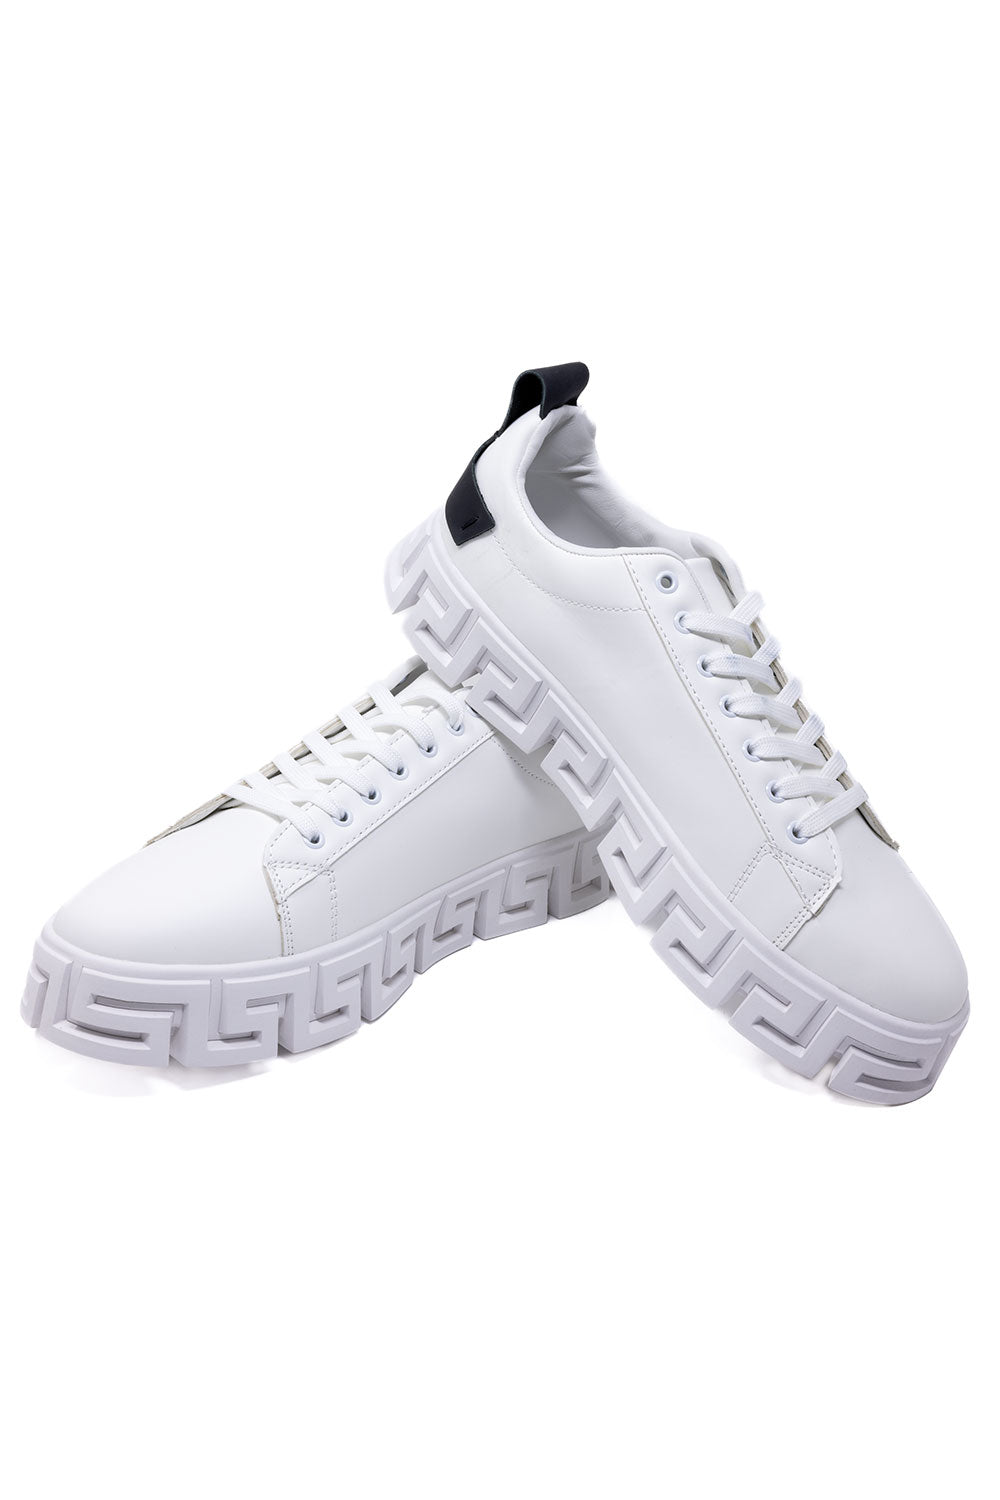 Barabas Men's Greek Key Sole Pattern Premium Sneakers 4SK06 White